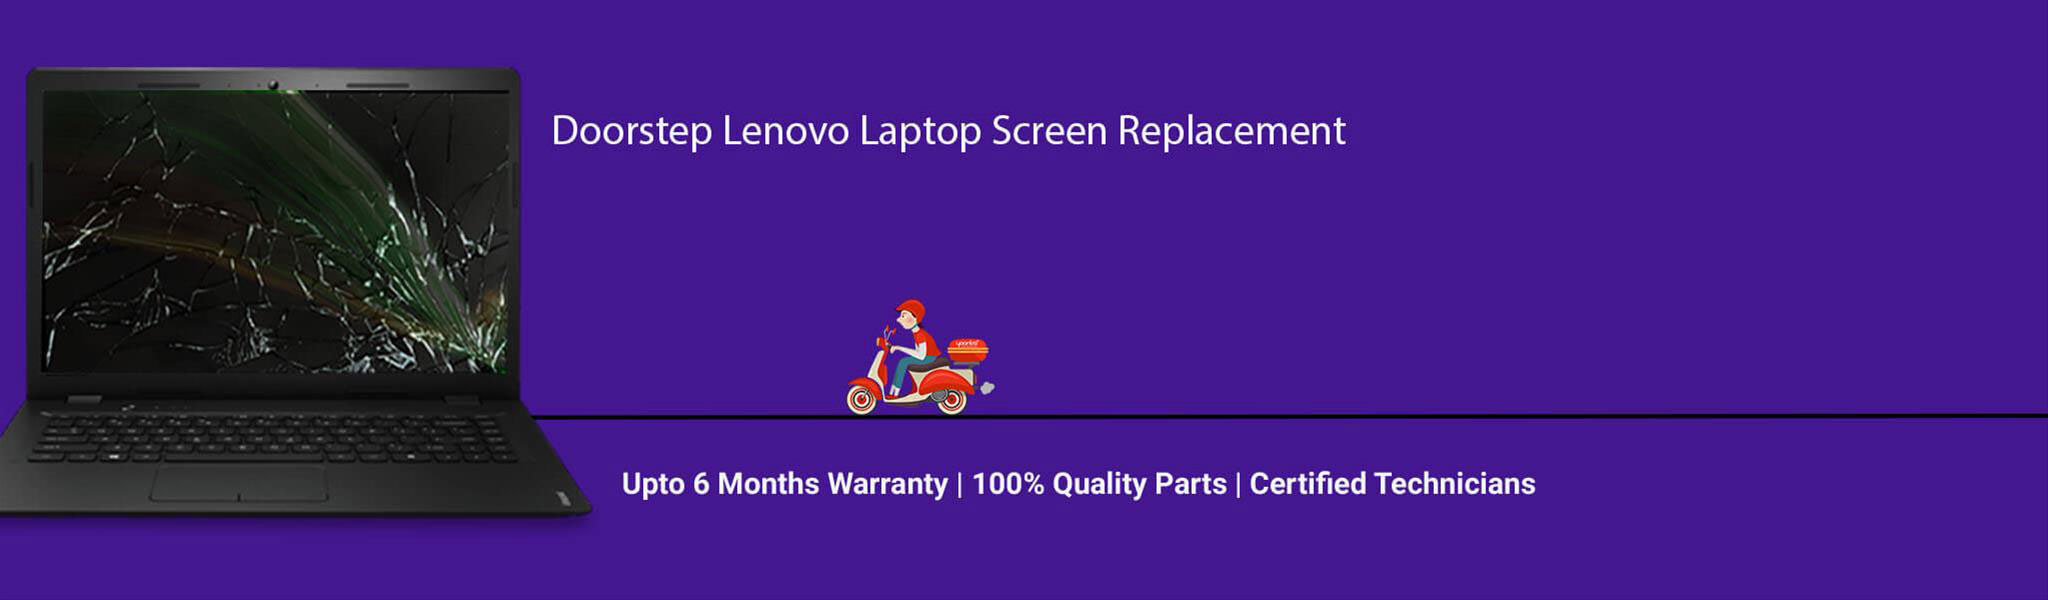 lenovo-laptop-screen-replacement.jpg